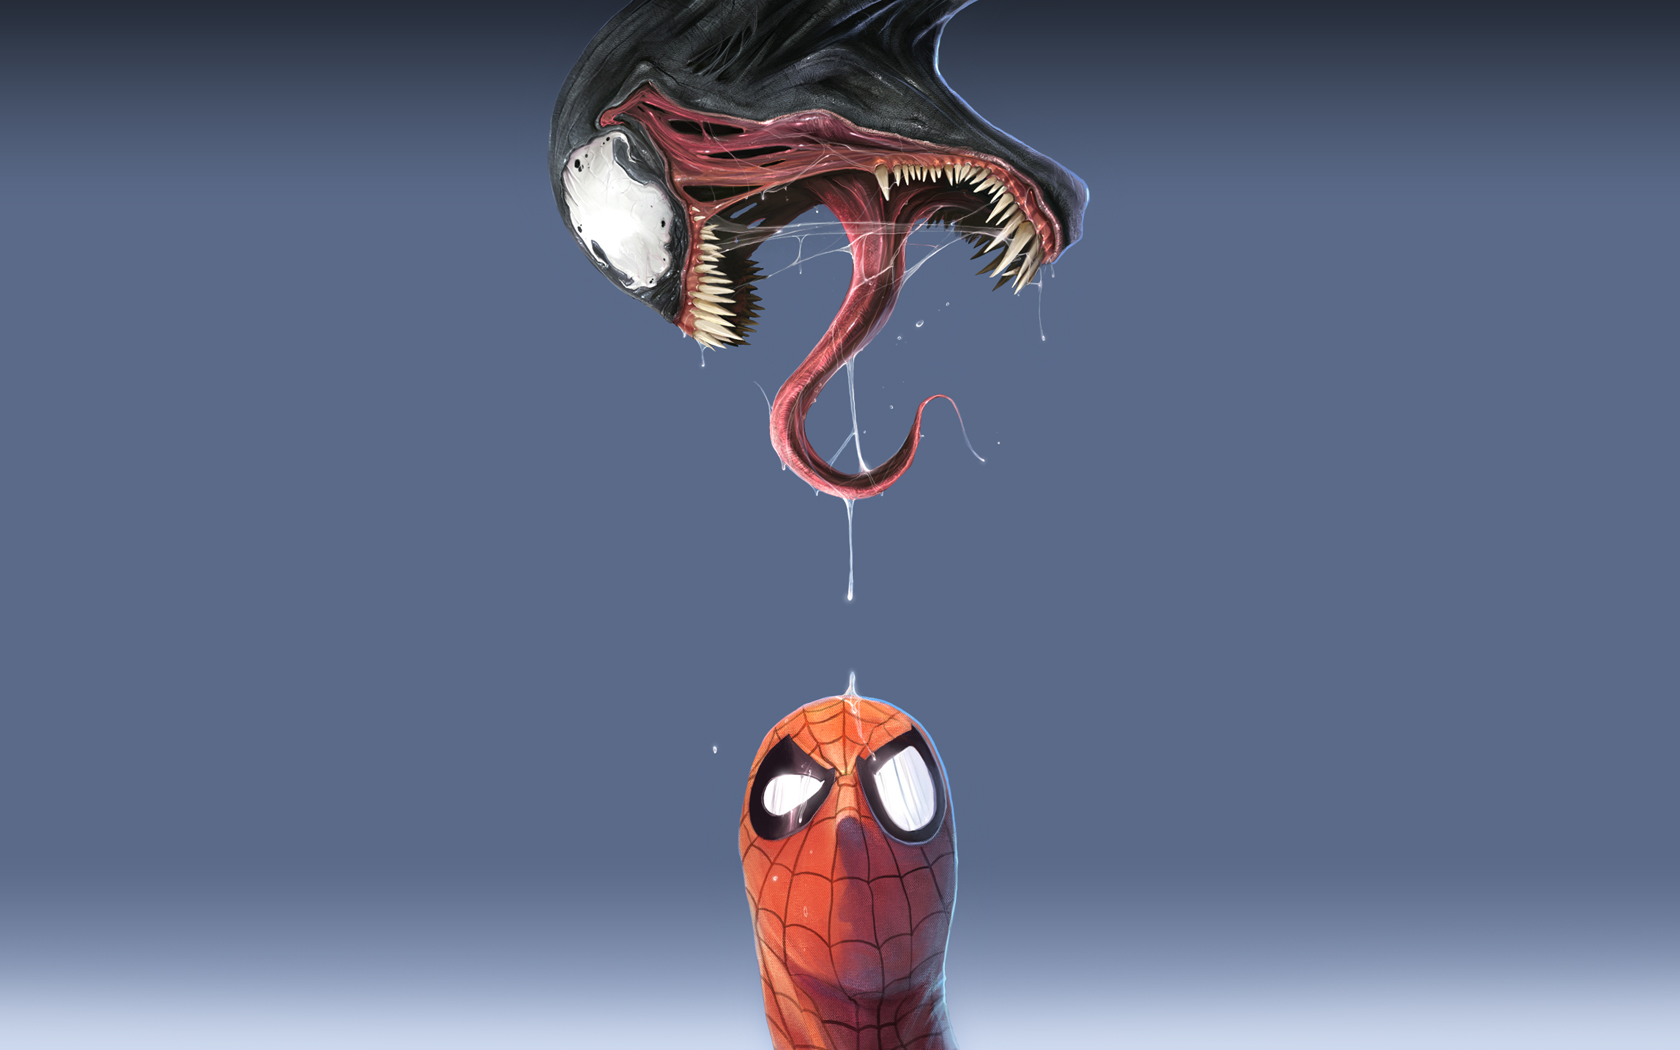 Spiderman And Venom 壁紙画像 Pchdwallpaper Com Pchdwallpaper Com